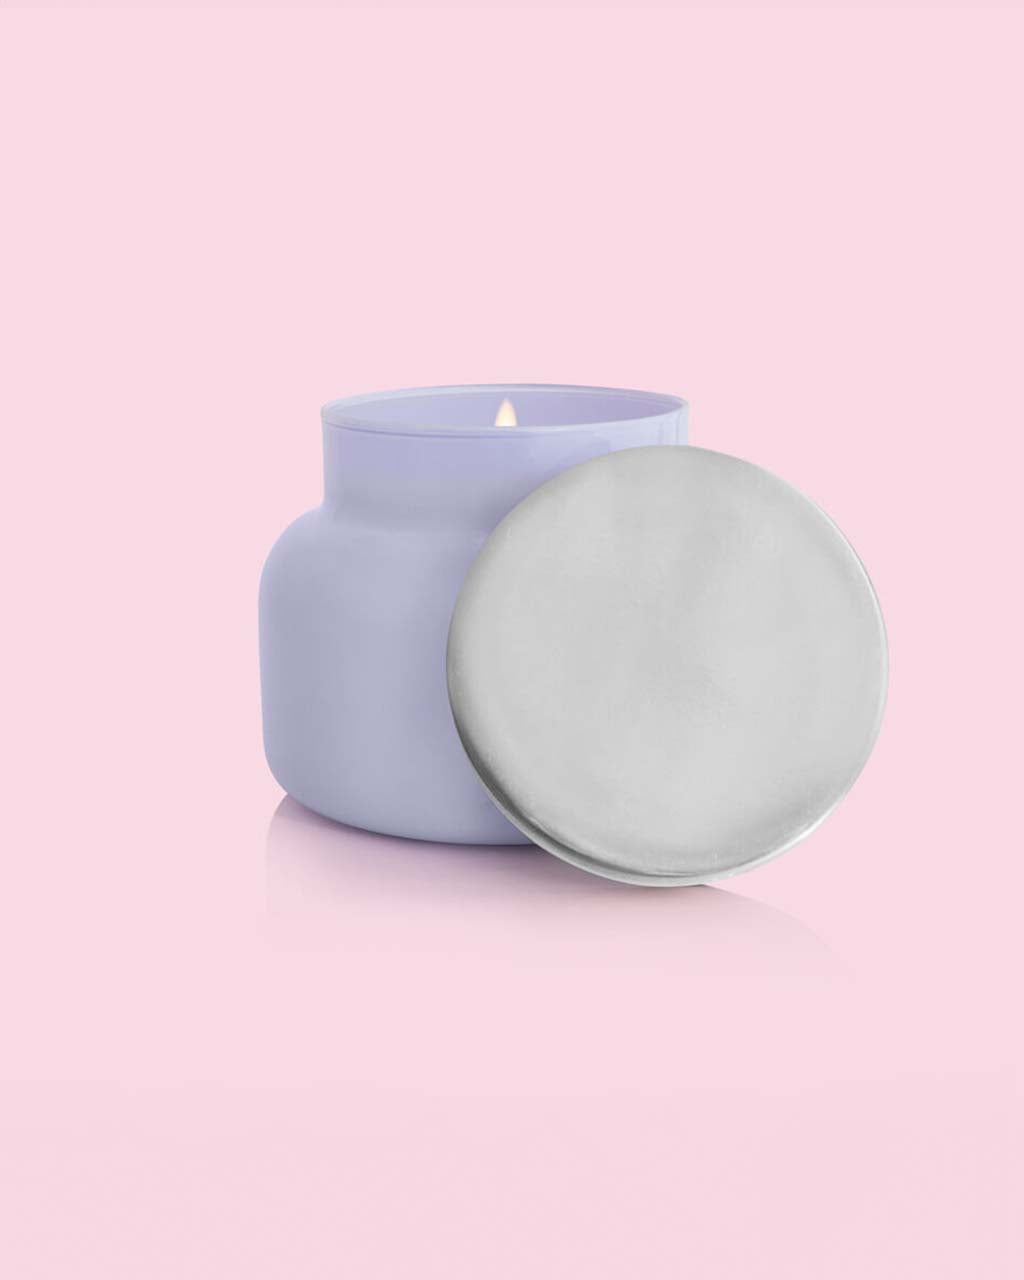 Volcano Digital Lavender Signature Jar Candle – ban.do